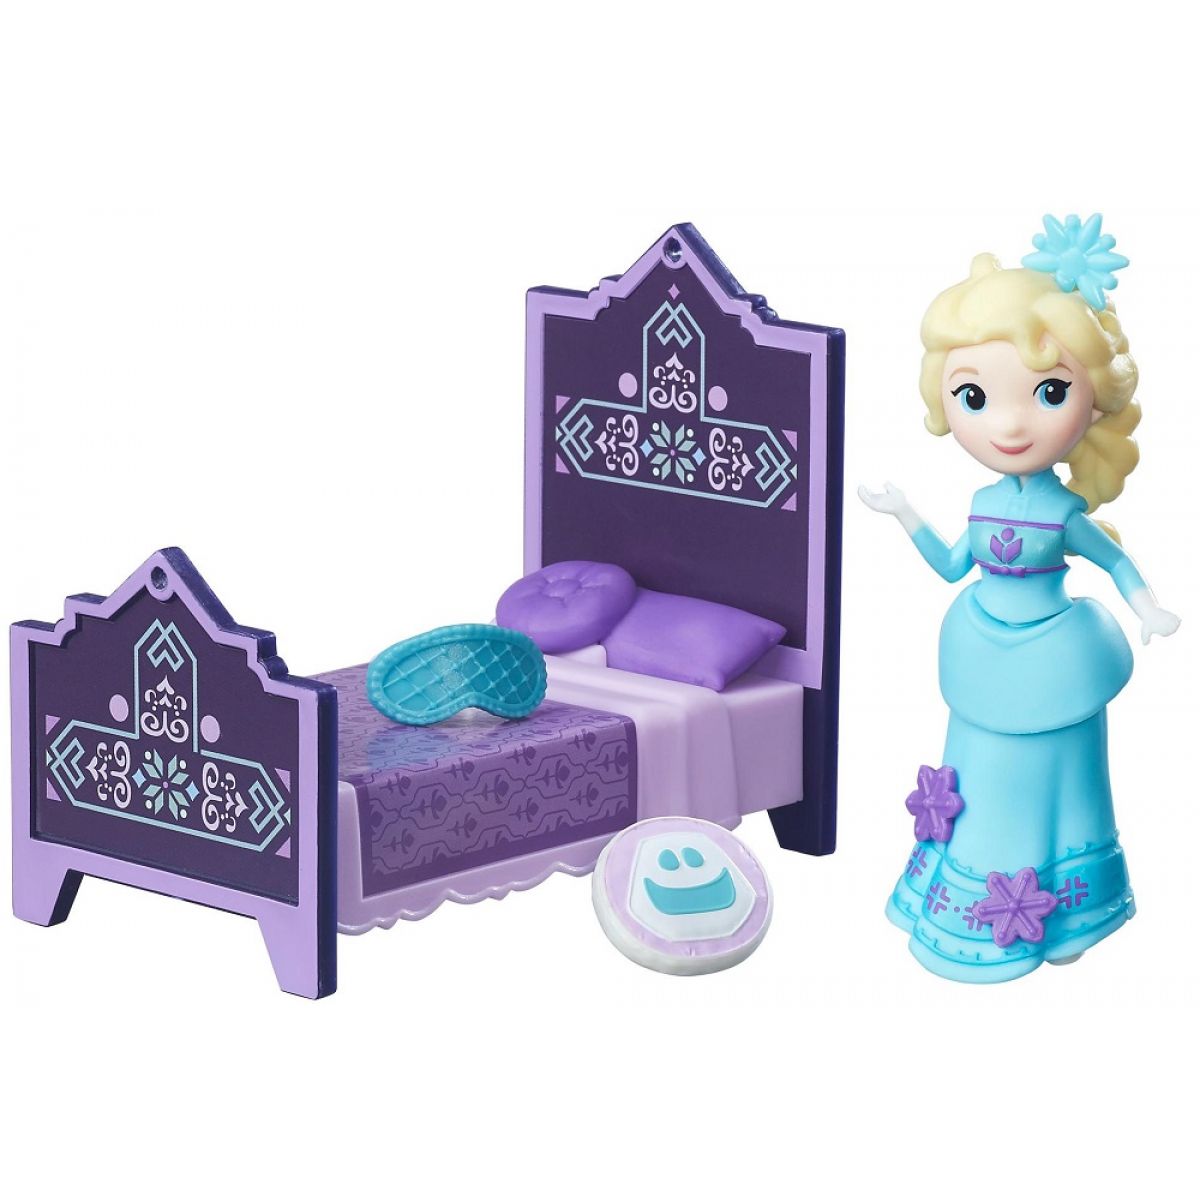 Hasbro Disney Frozen Little Kingdom Mini panenka s doplňky - Rise & Shine Elsa